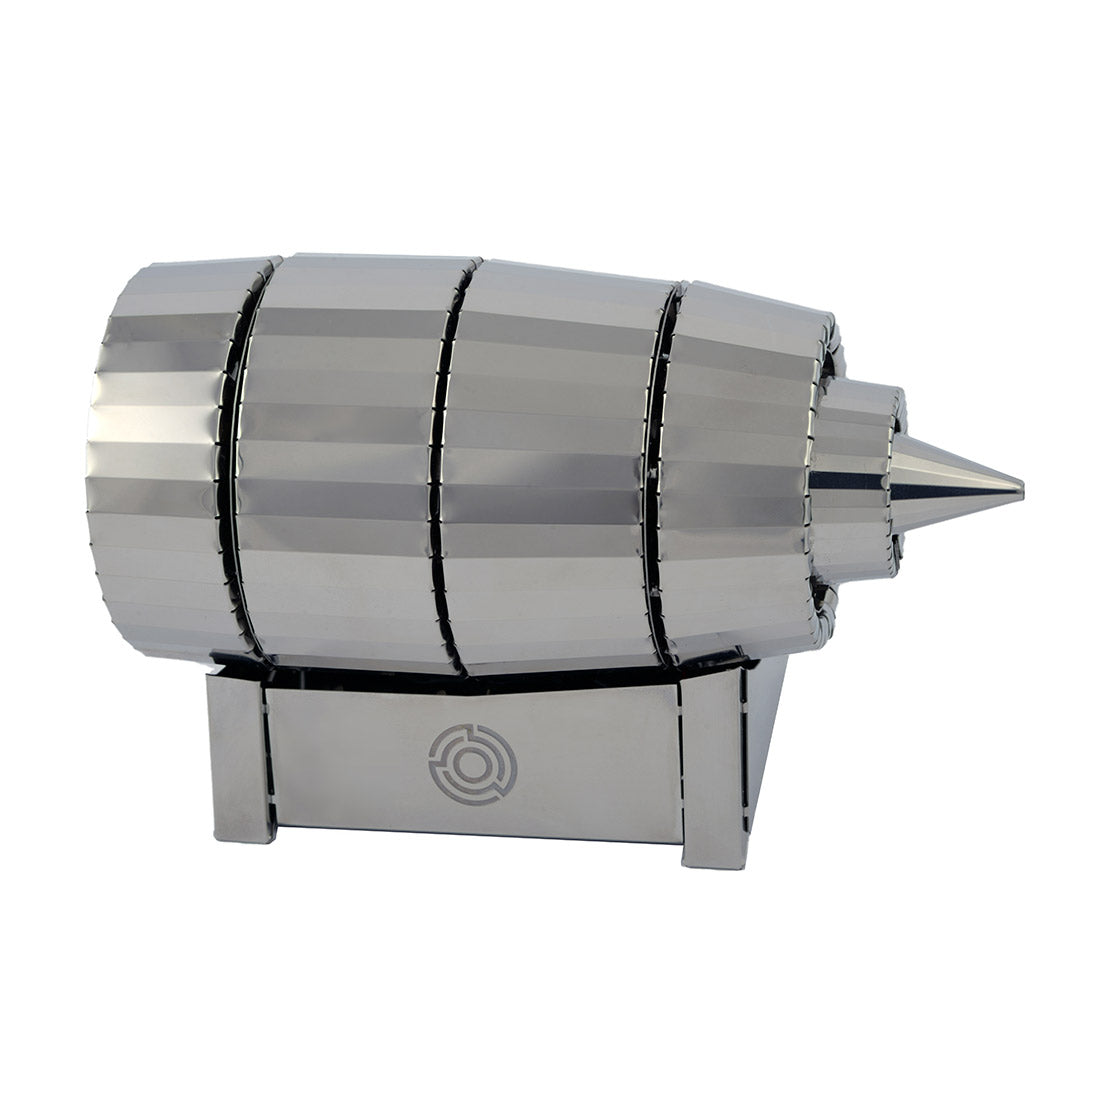 57pcs 3D Mechanical Rotating Turbine Jet Engine Model Kit -Air Force